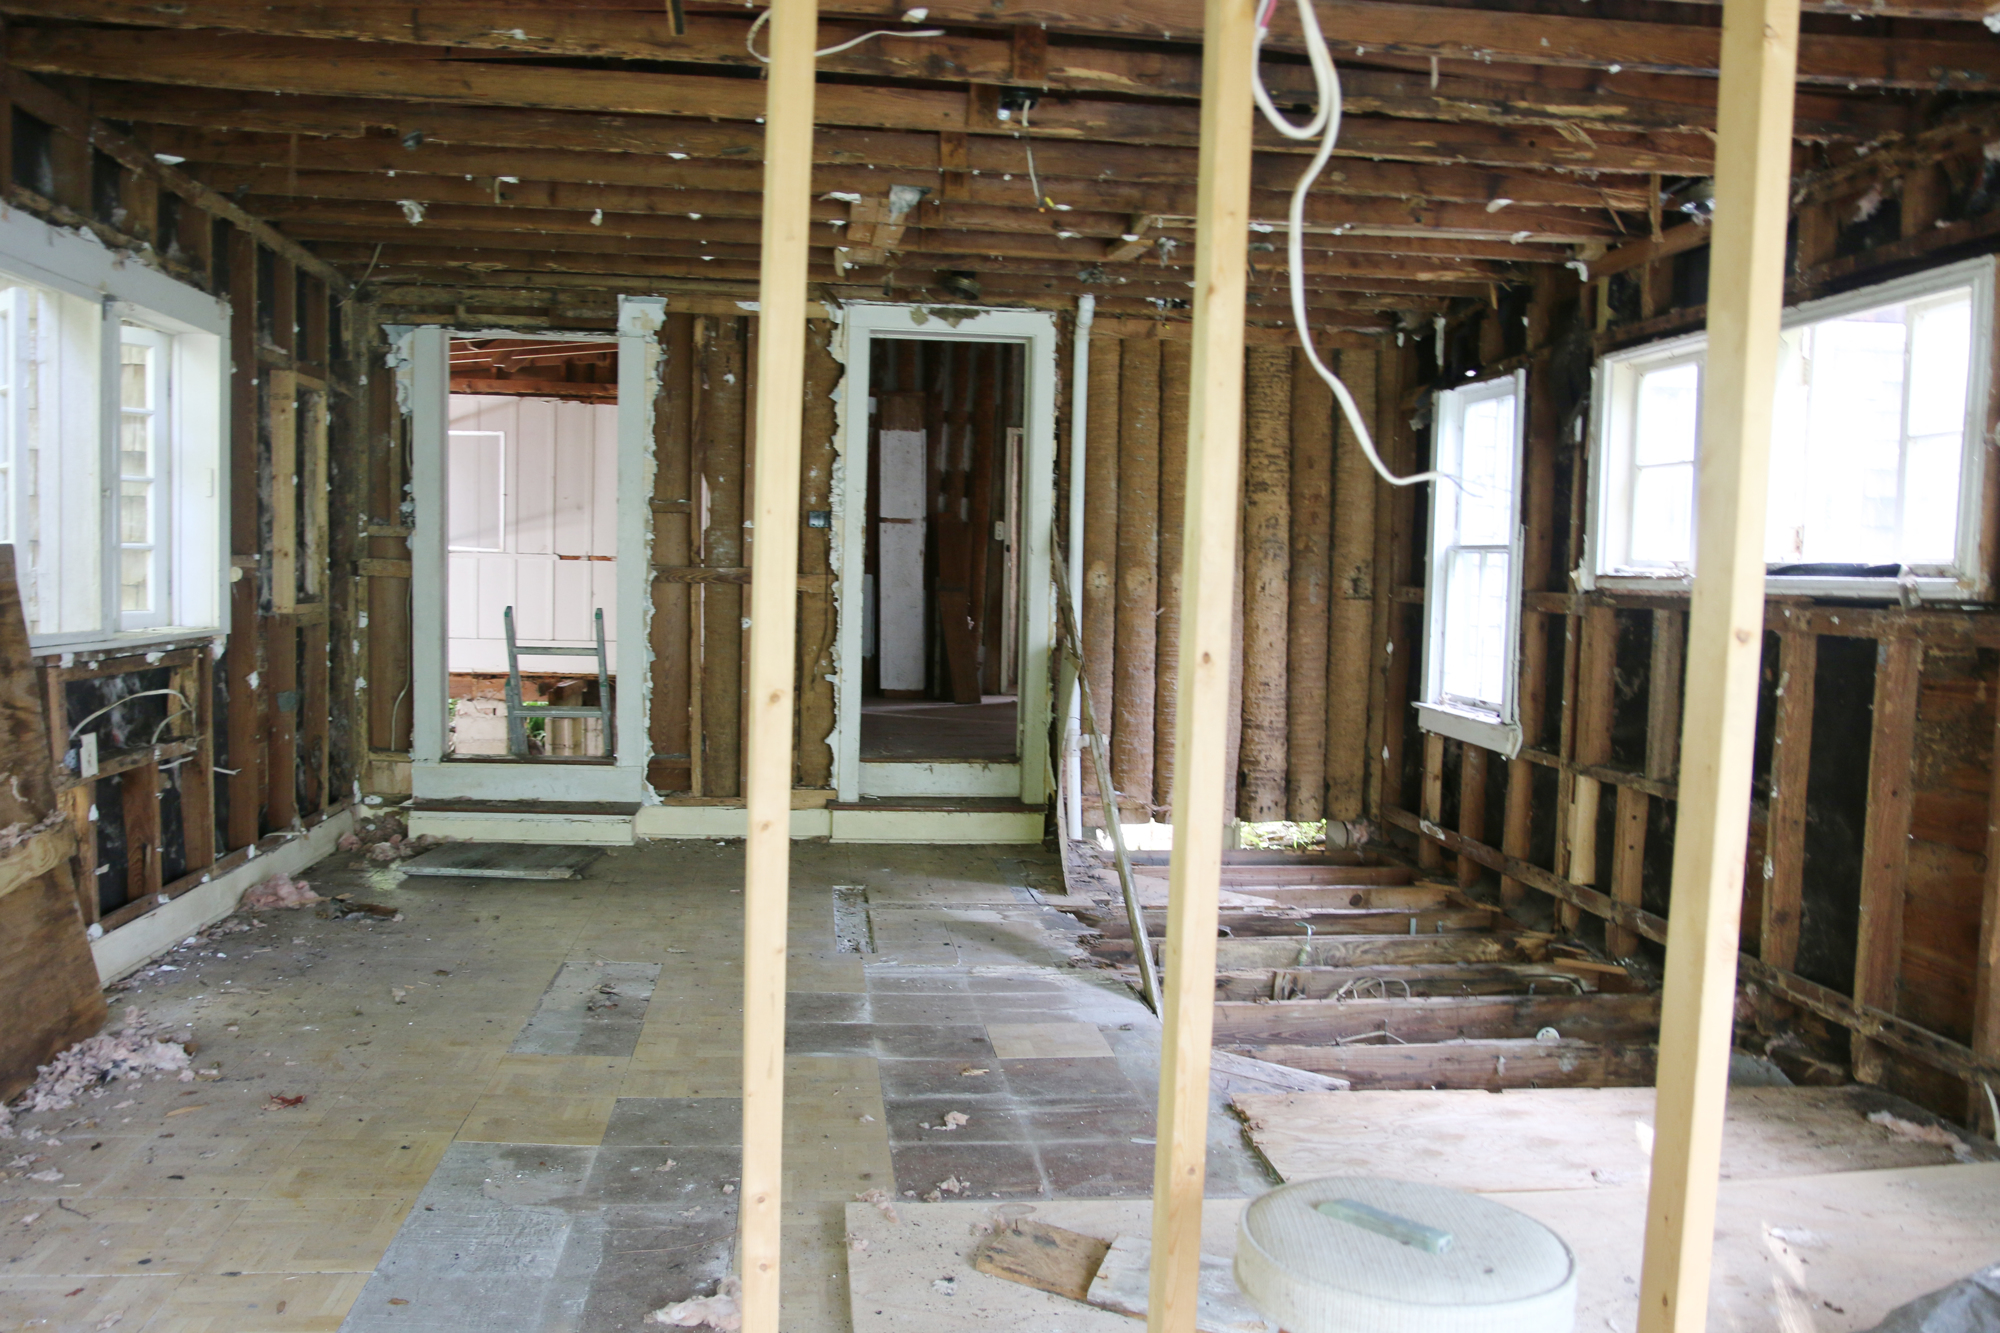 The interior of the John Anderson Cabin shows severe damage. Courtesy photo